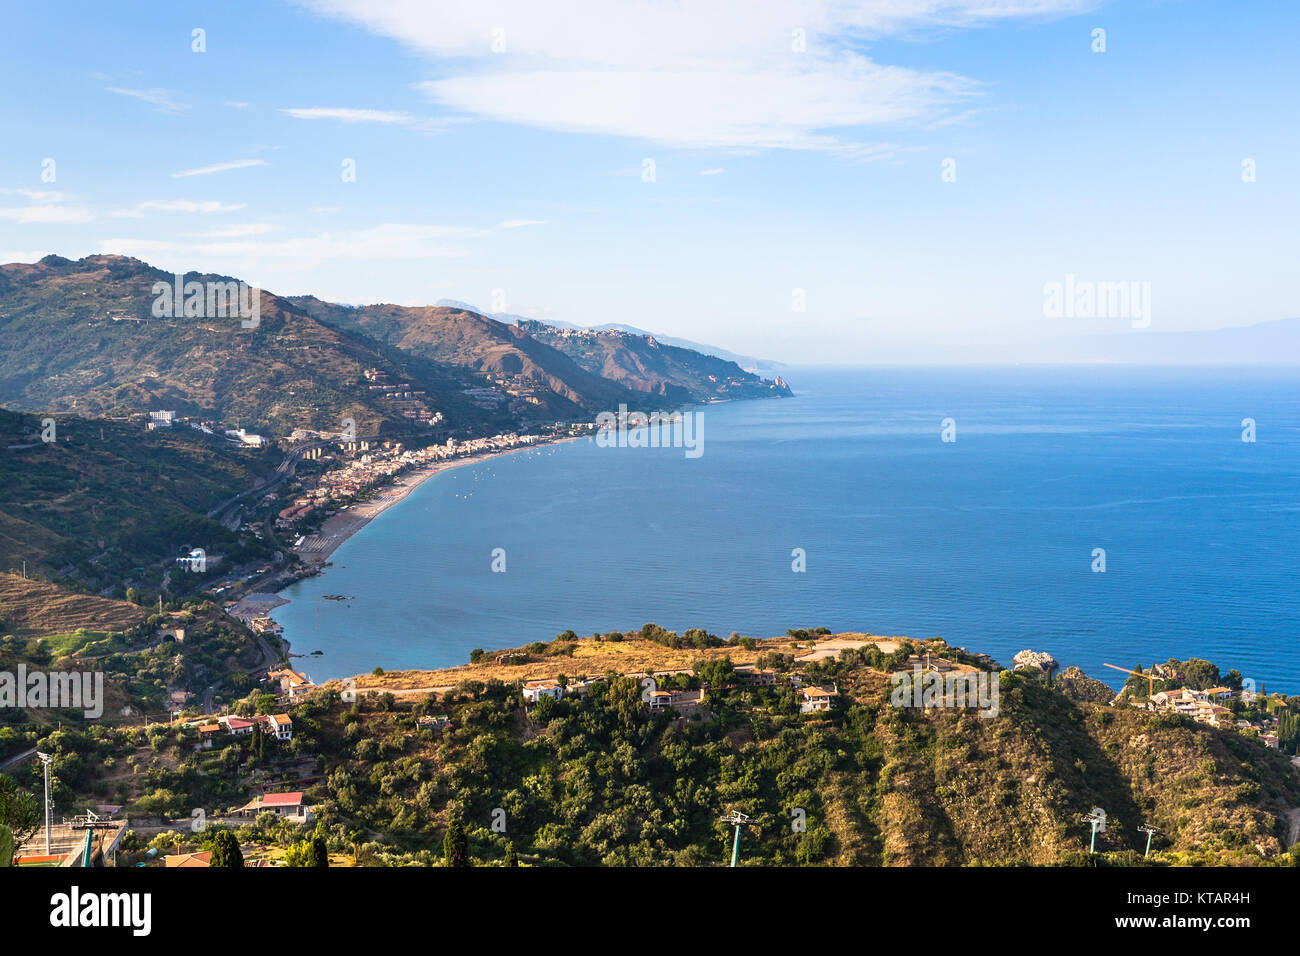 view of Letojanni resort and coast of Ionian sea Stock Photo